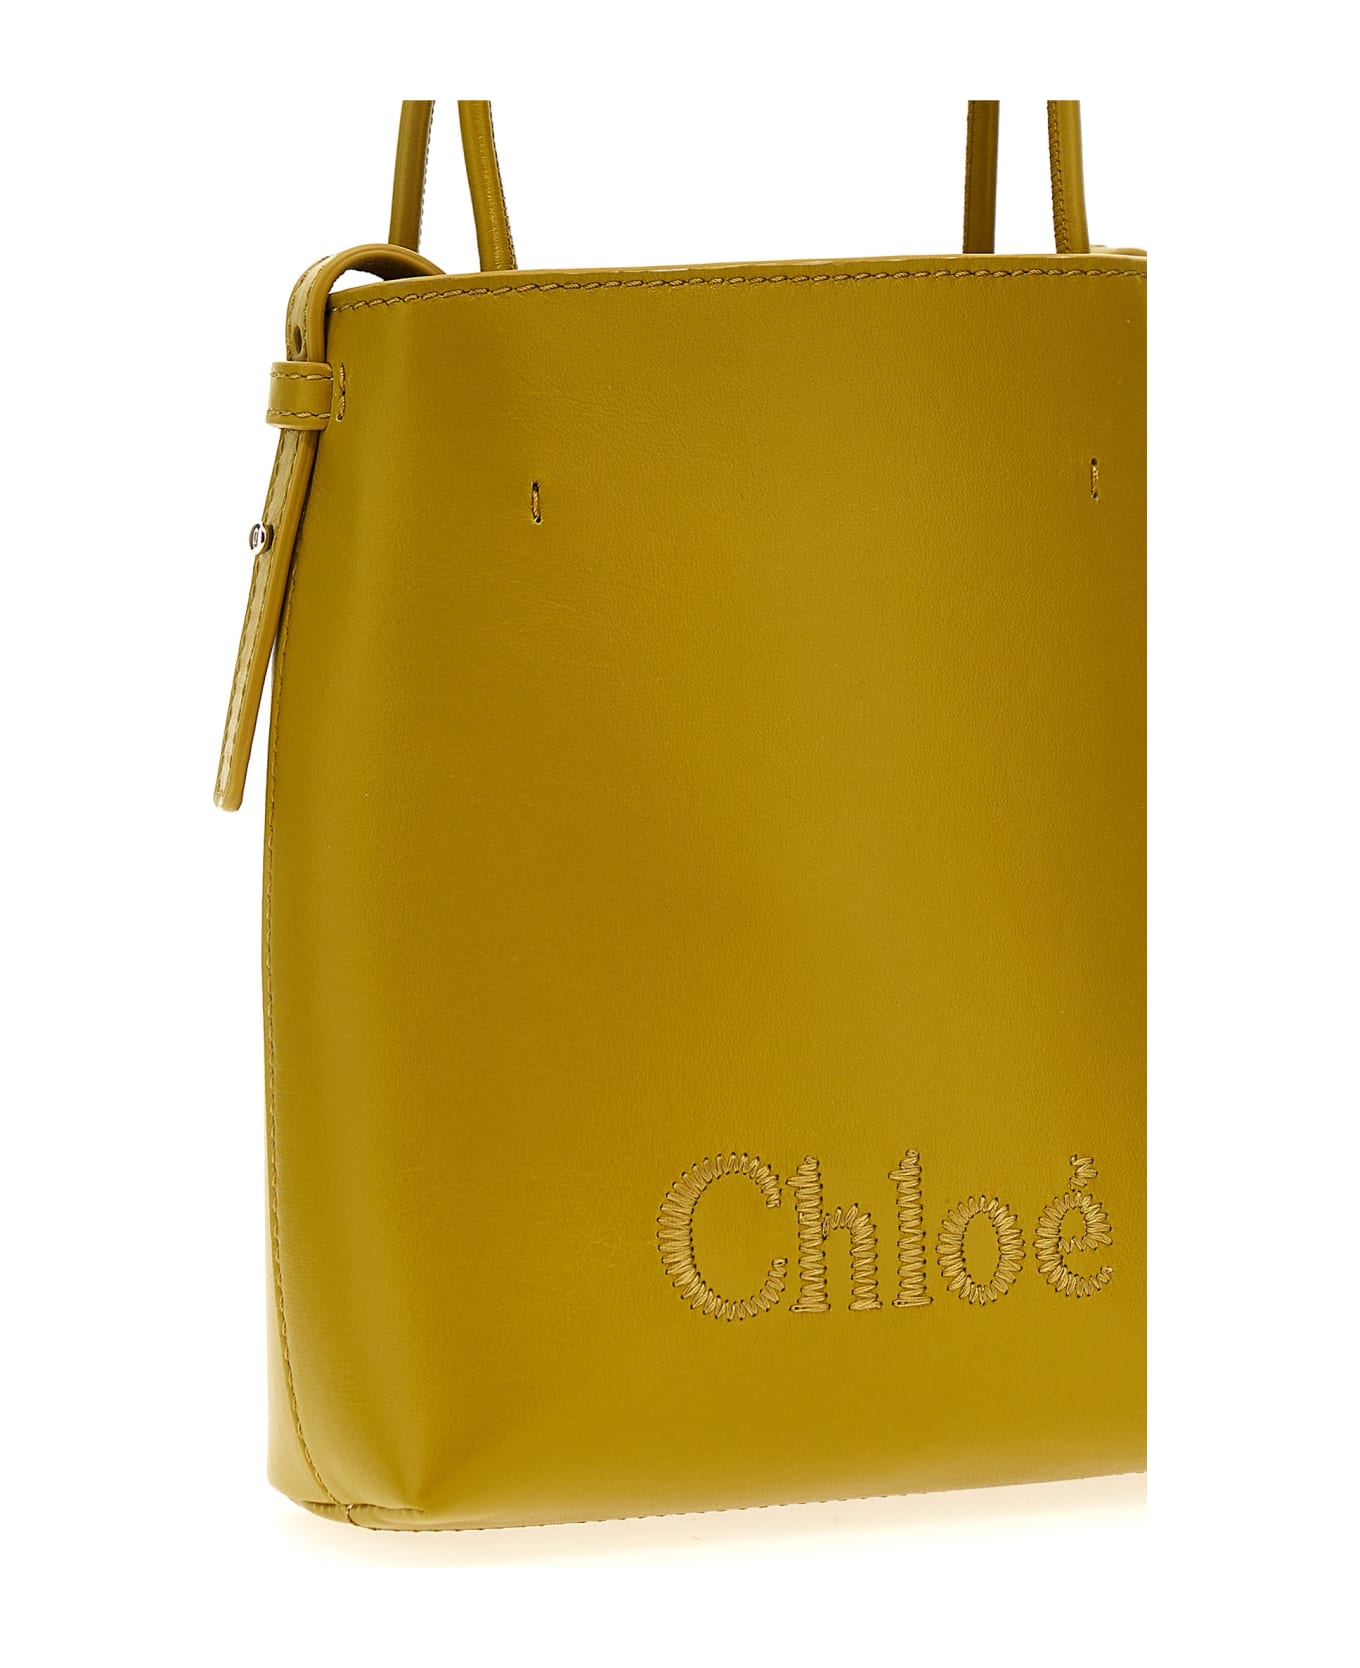 Chloé 'micro Chloe Sense' Bucket Bag - Green